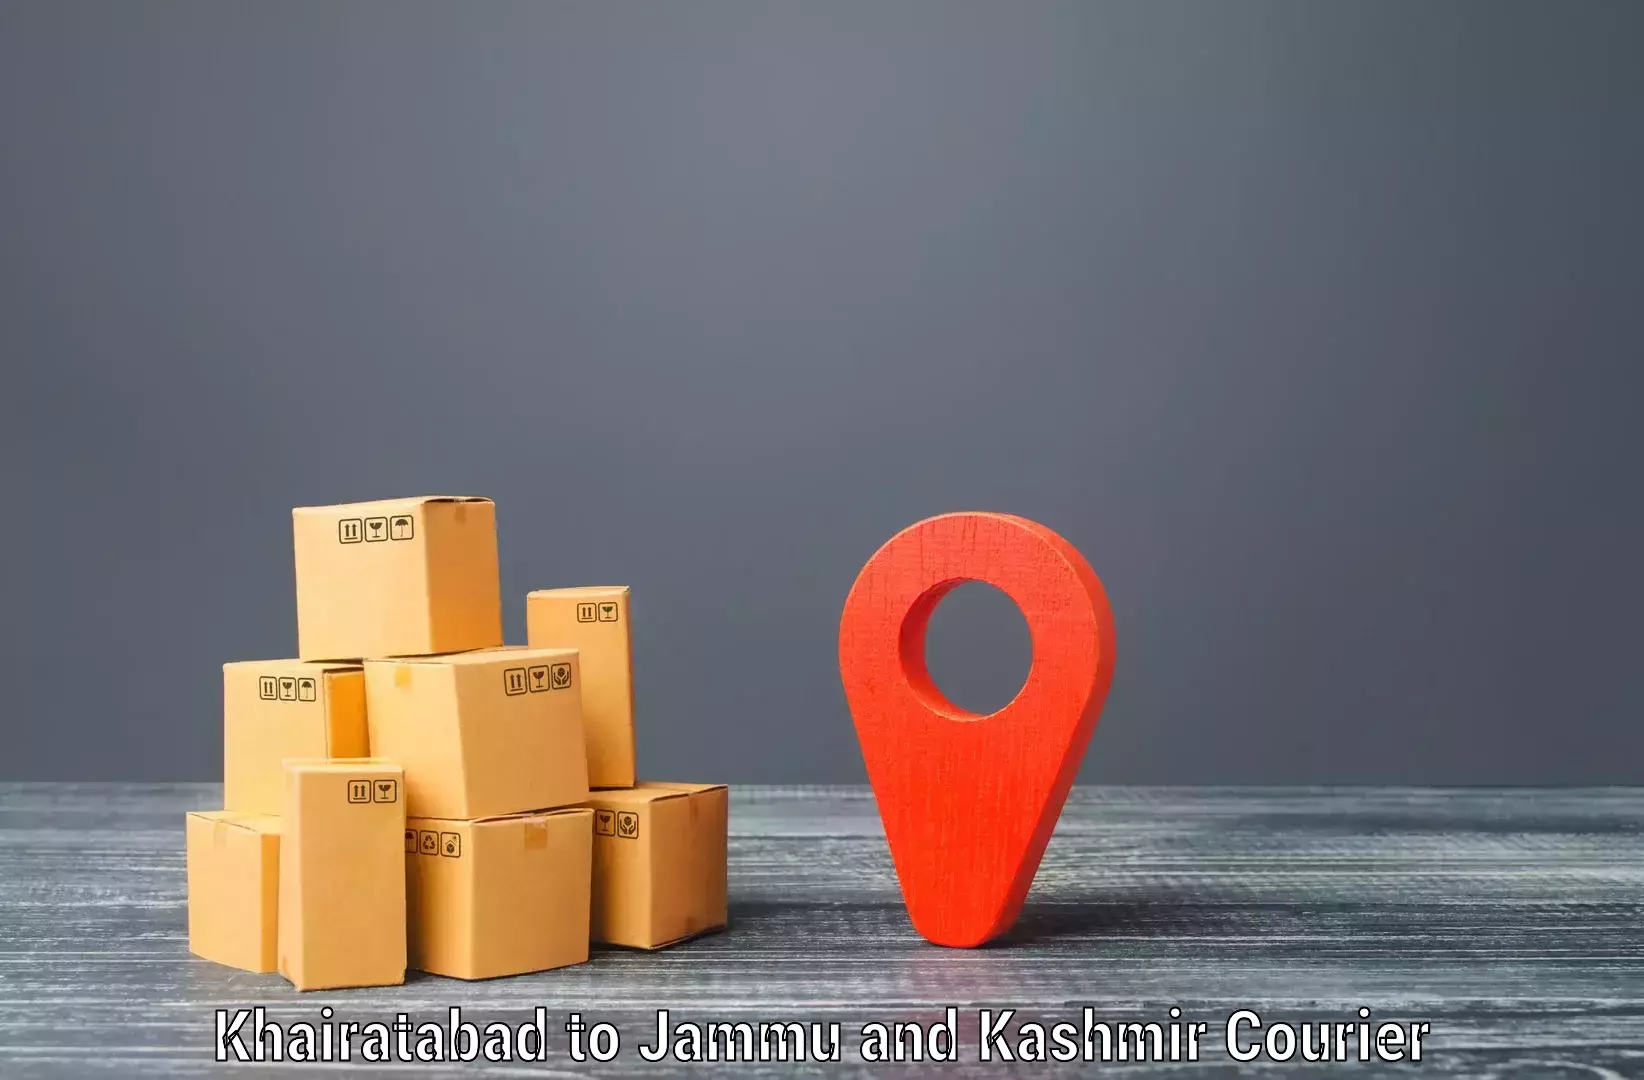 Advanced shipping technology Khairatabad to Katra